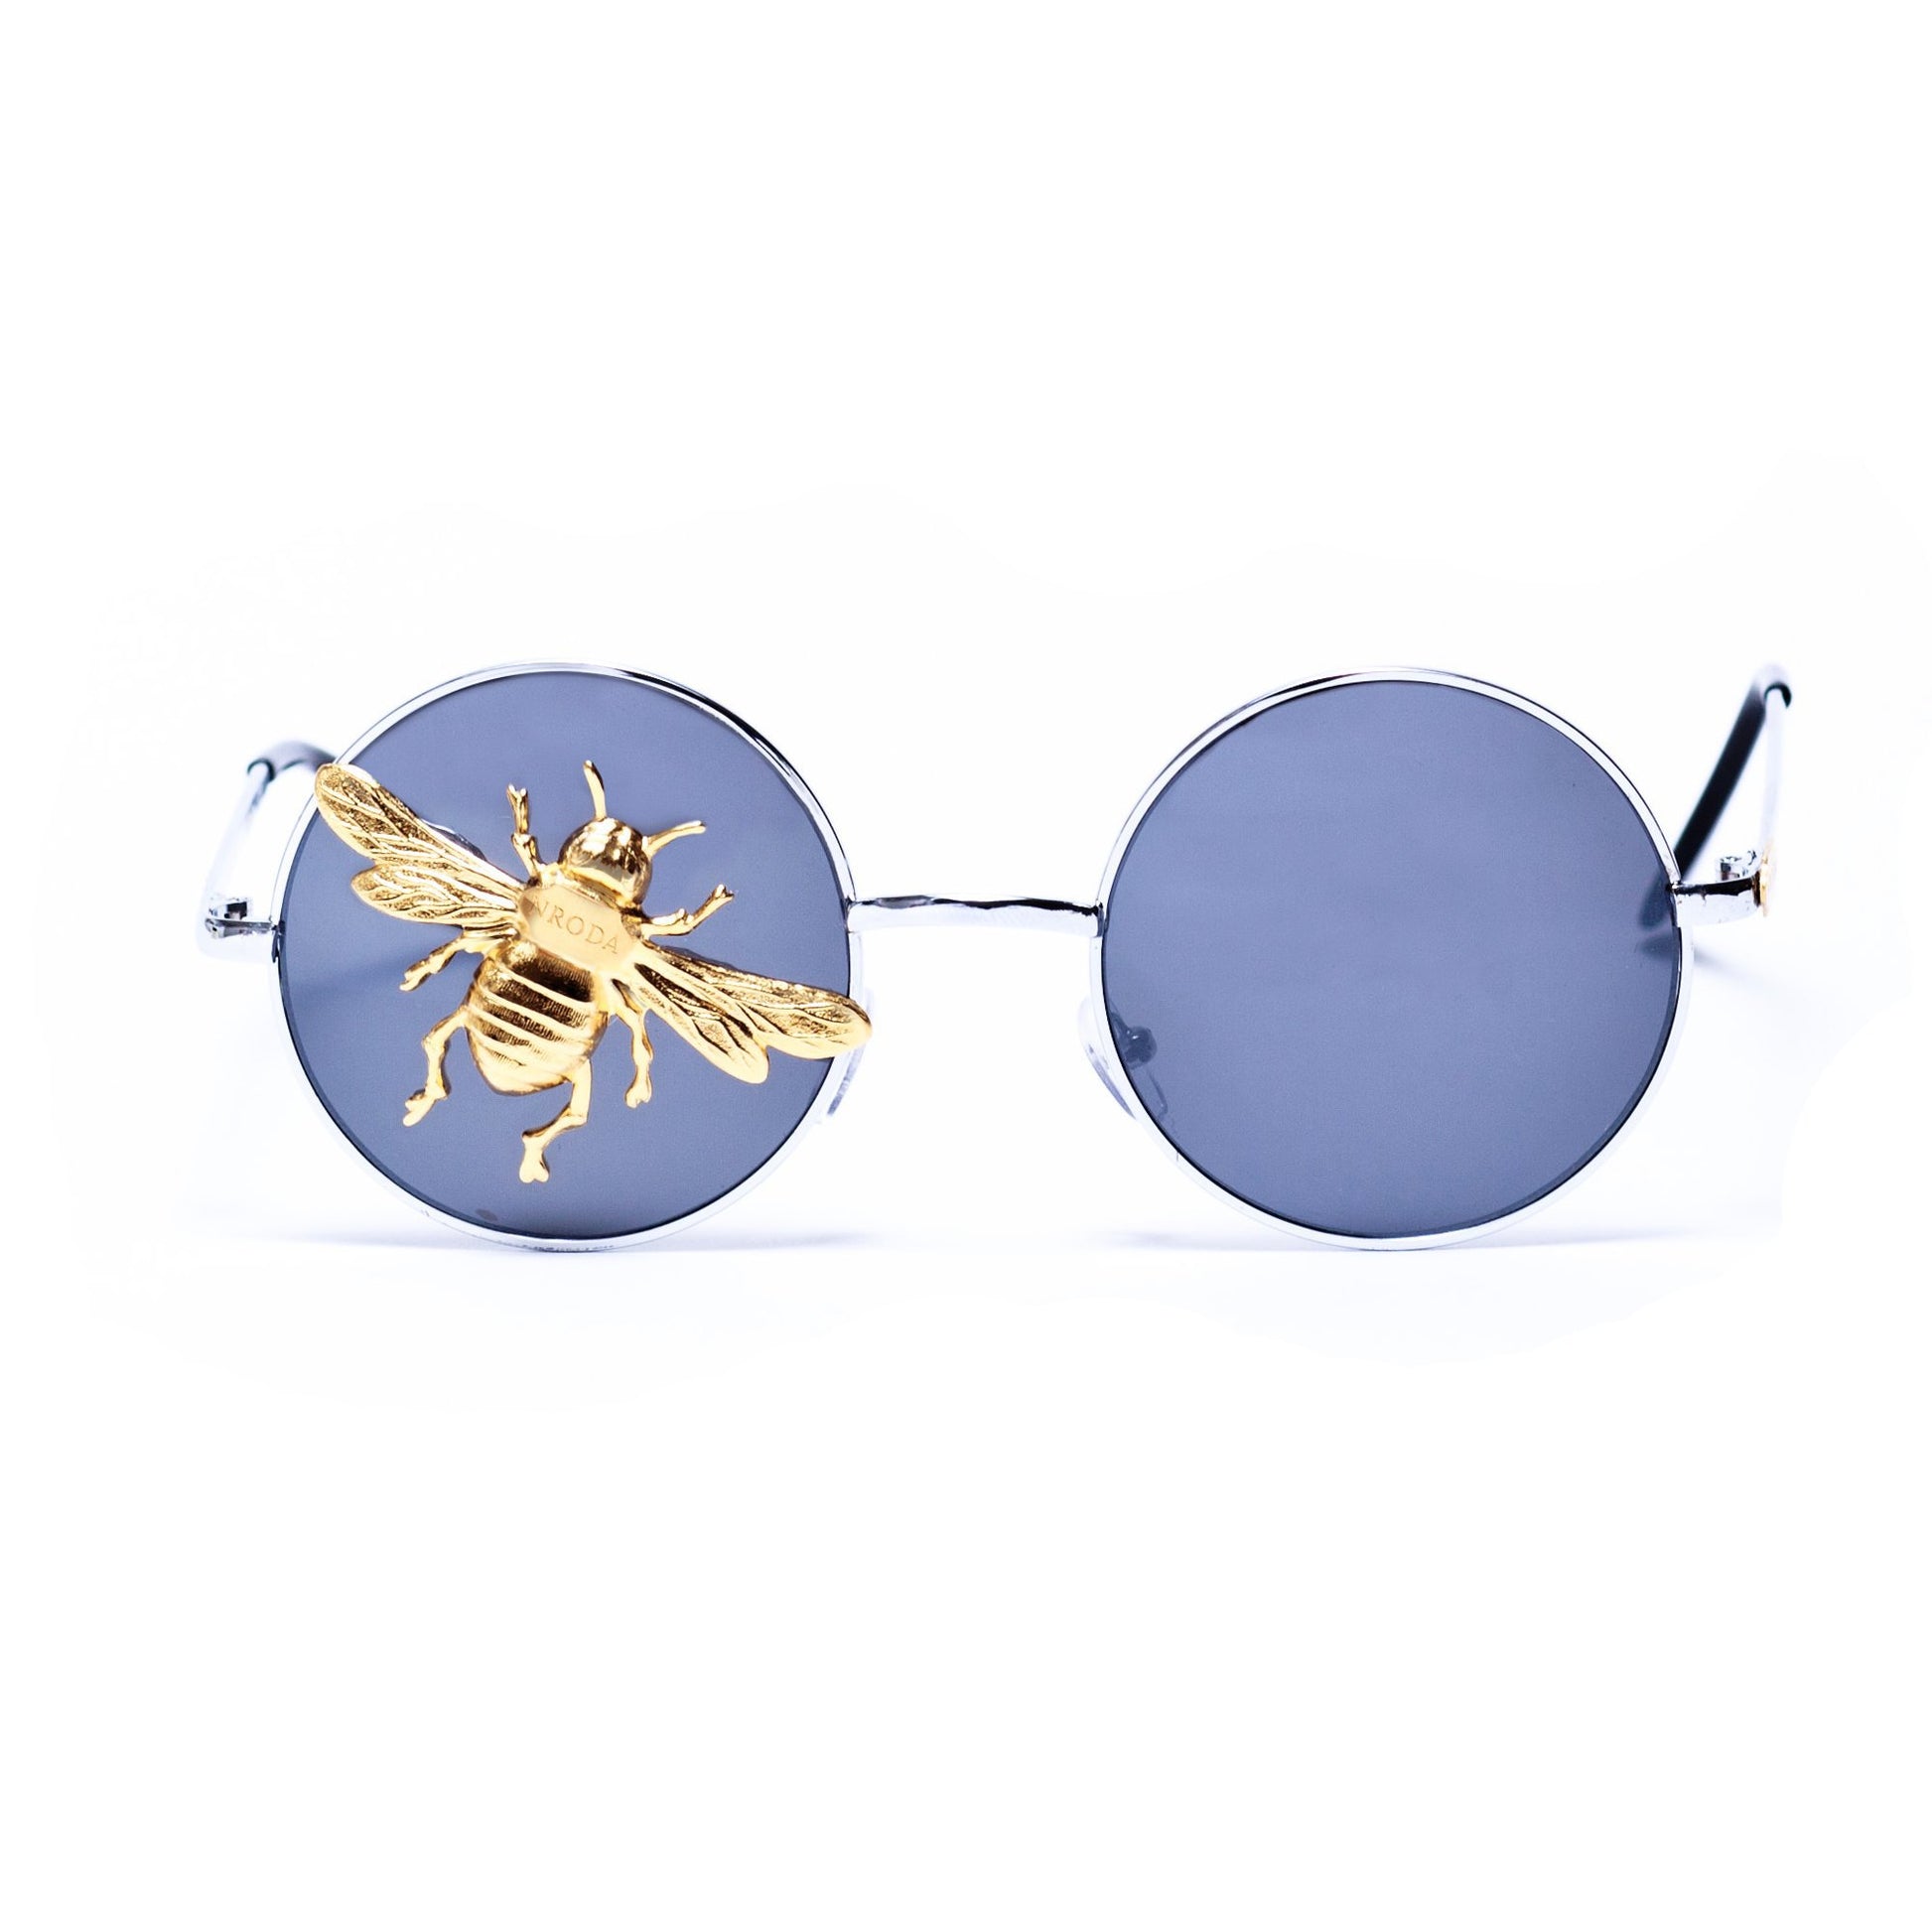 STINGER SUNNIES 24k Gold Plating / Metal Frame/Jet lens Eyewear Sunglasses Collection- NRODA